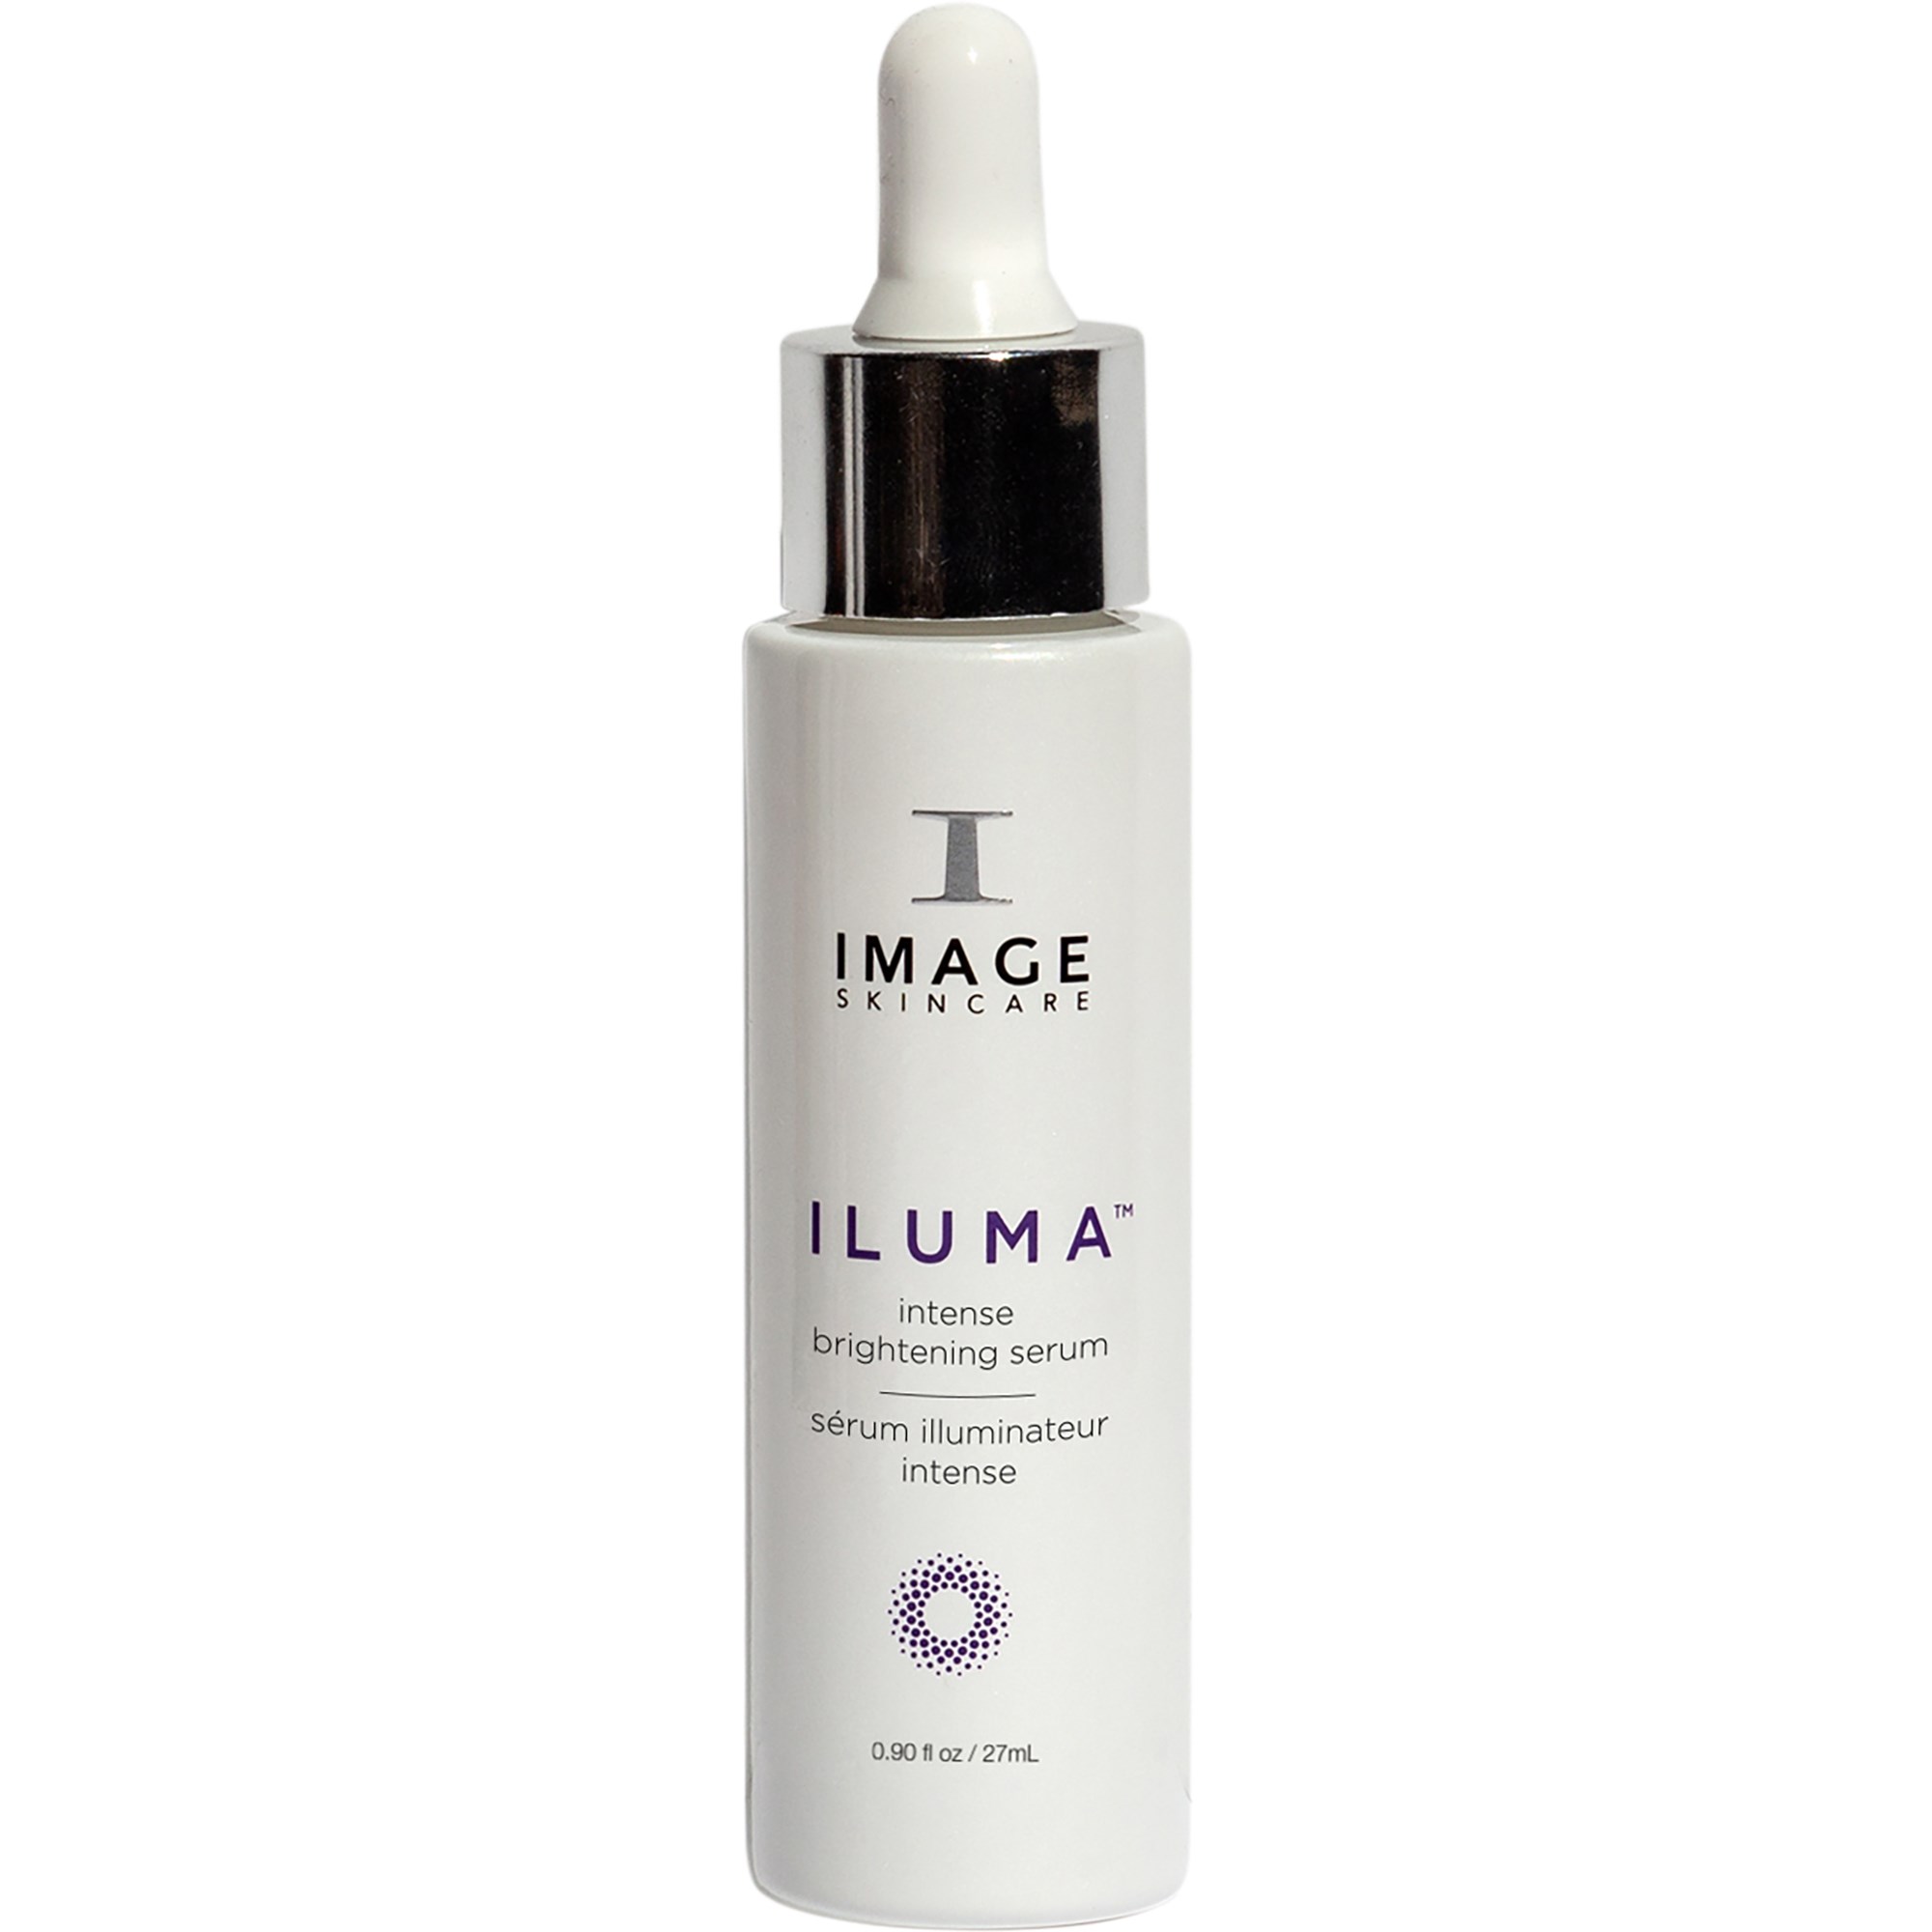 IMAGE Skincare Iluma® Intense Brightening Serum 27 ml